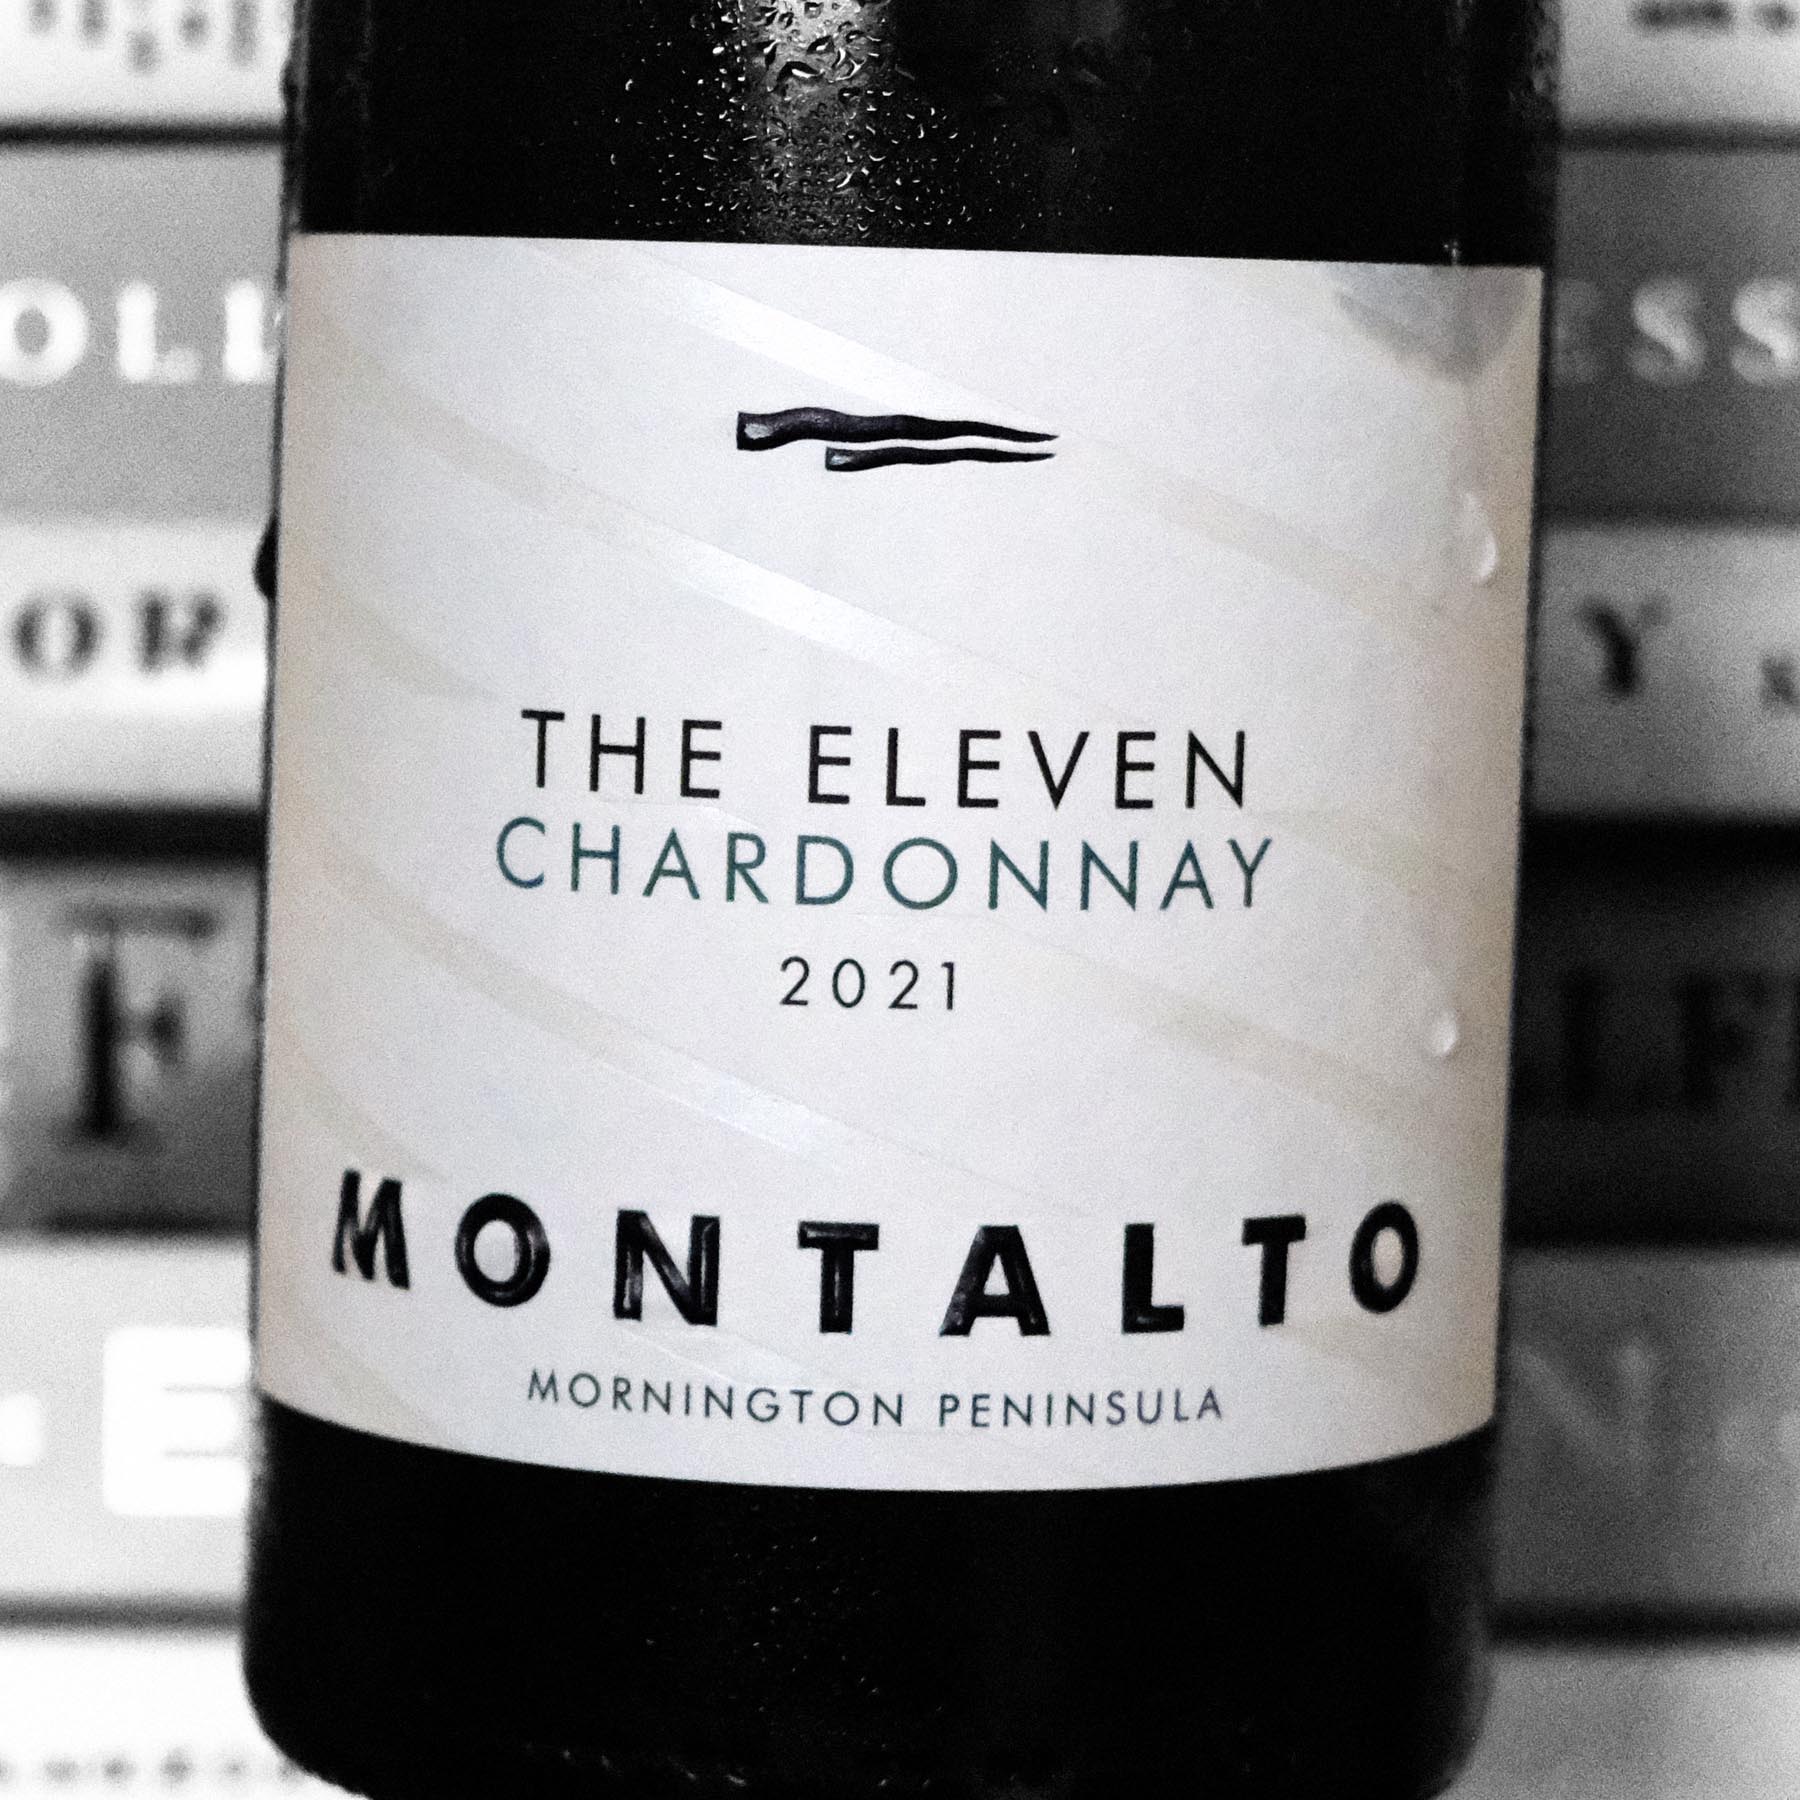 Montalto Single Vineyard The Eleven Chardonnay 2021 Mornington Peninsula, Victoria